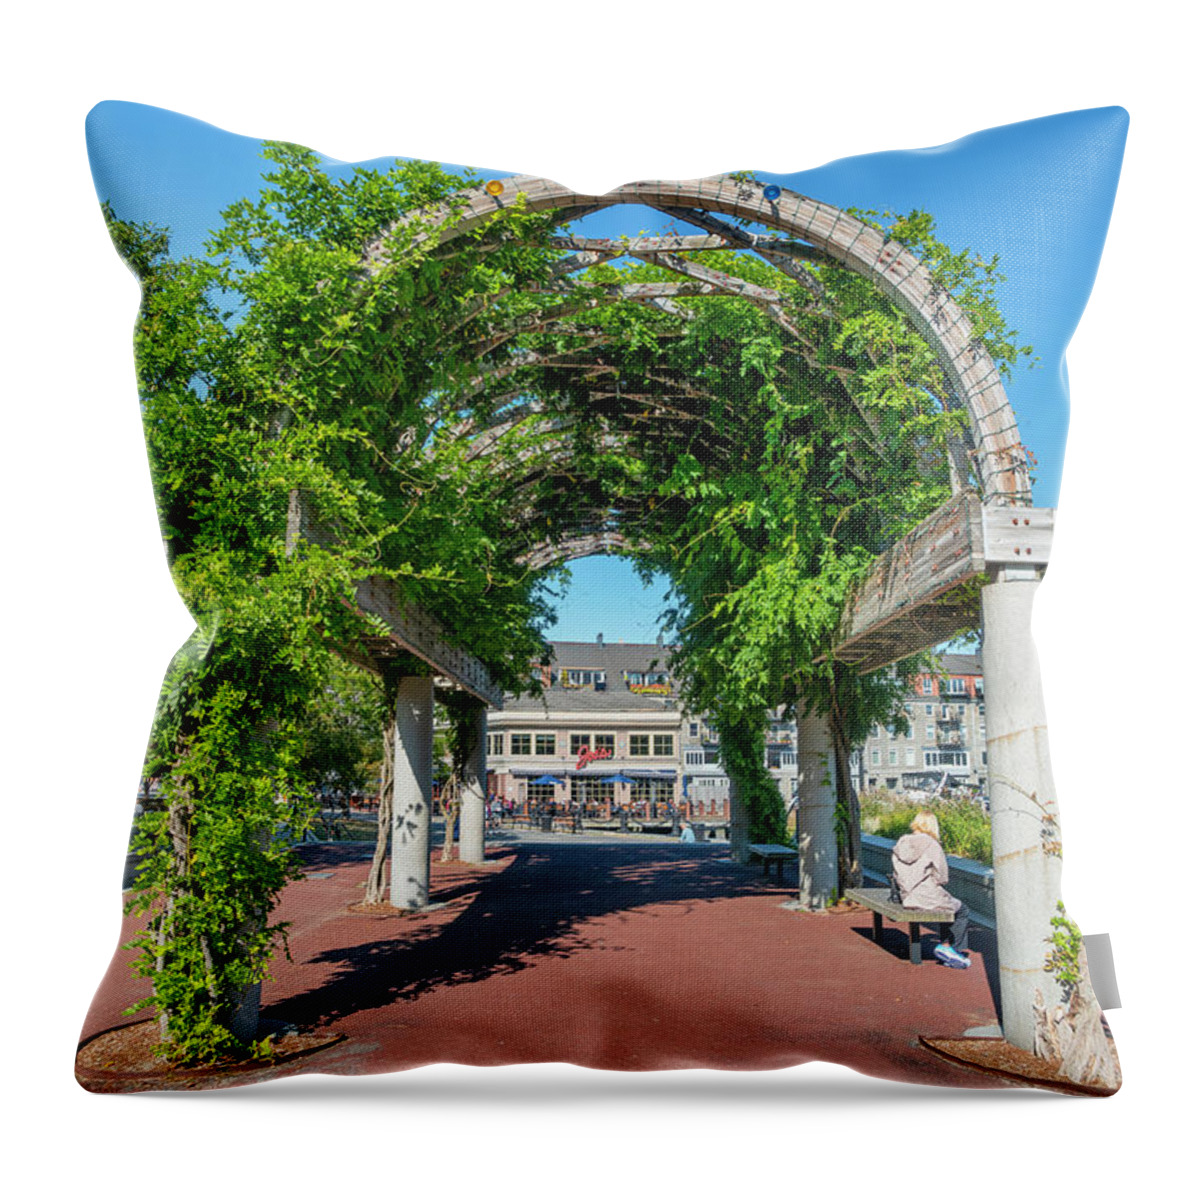 Estock Throw Pillow featuring the digital art Christopher Columbus Park, Boston Ma #2 by Laura Zeid